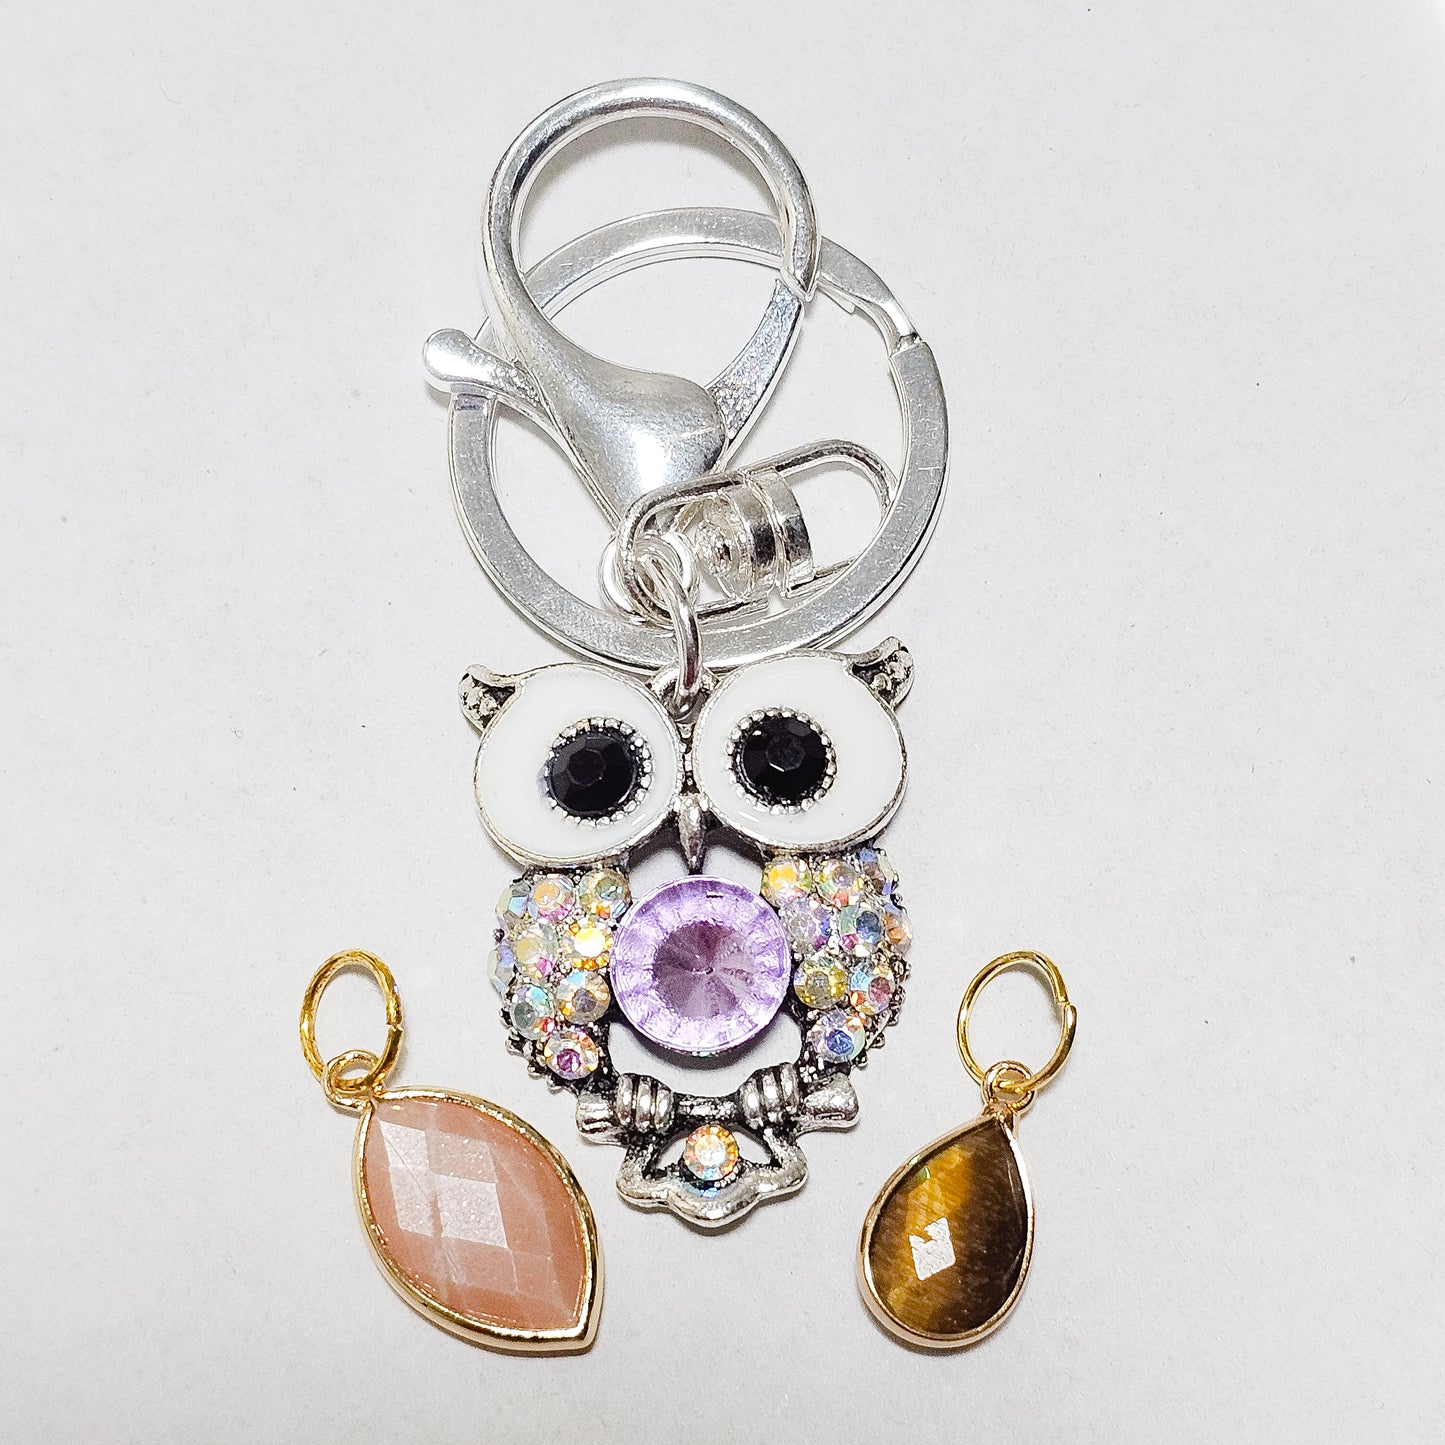 Abundance Crystal Confetti with added keychain or pendant/charm.